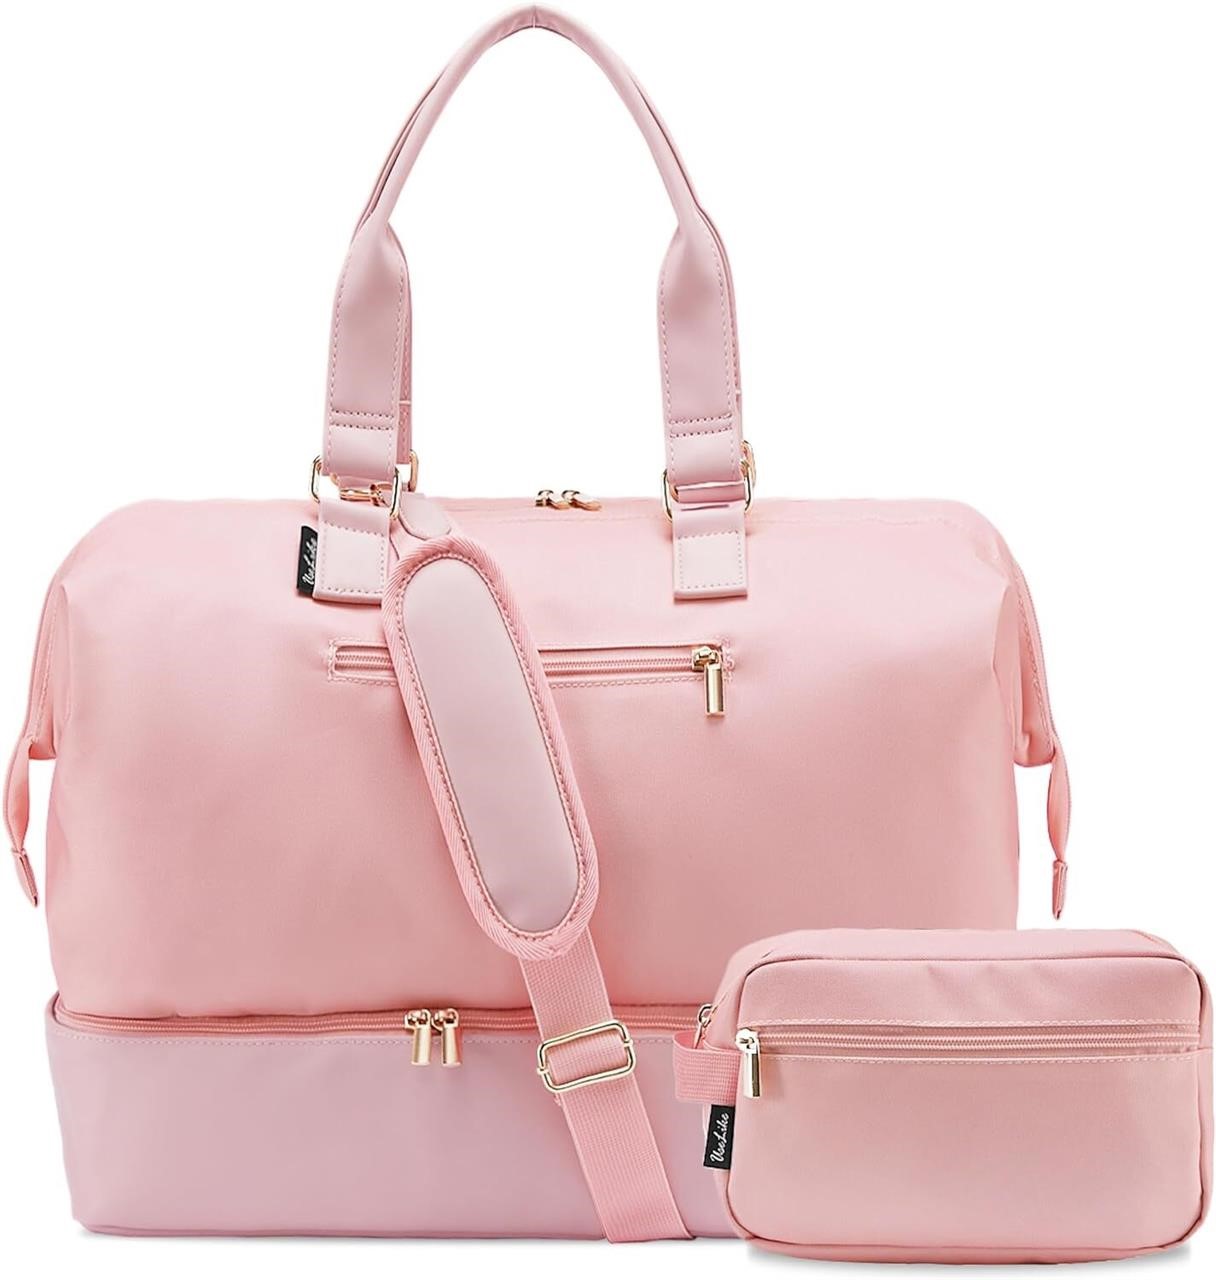 Weekender Bag for Women, Light Pink Medium